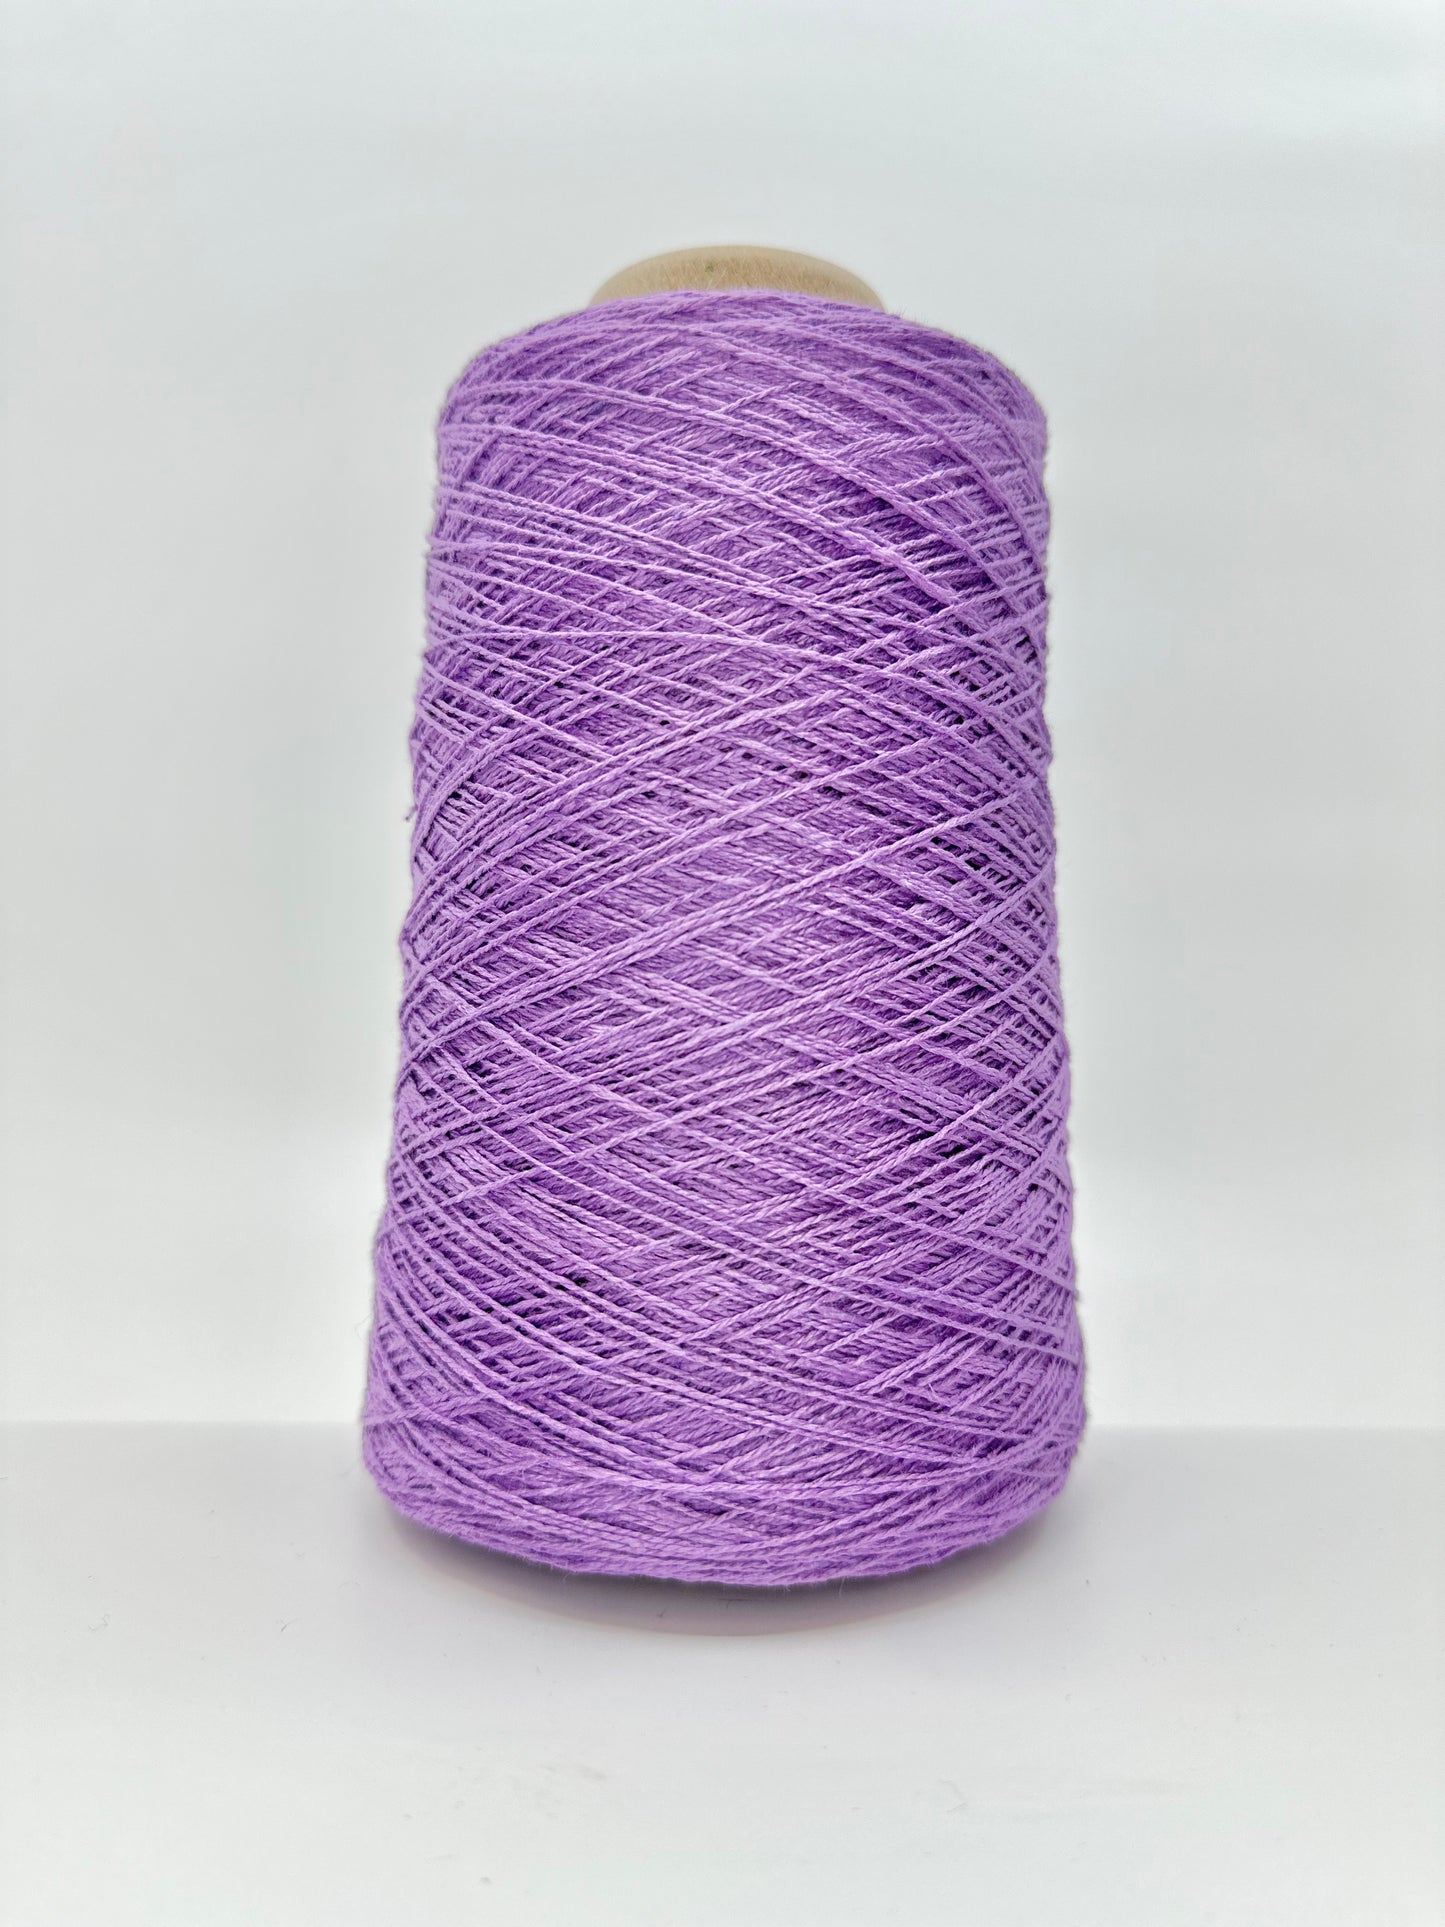 Euroflax 14/2 Linen - Lavender